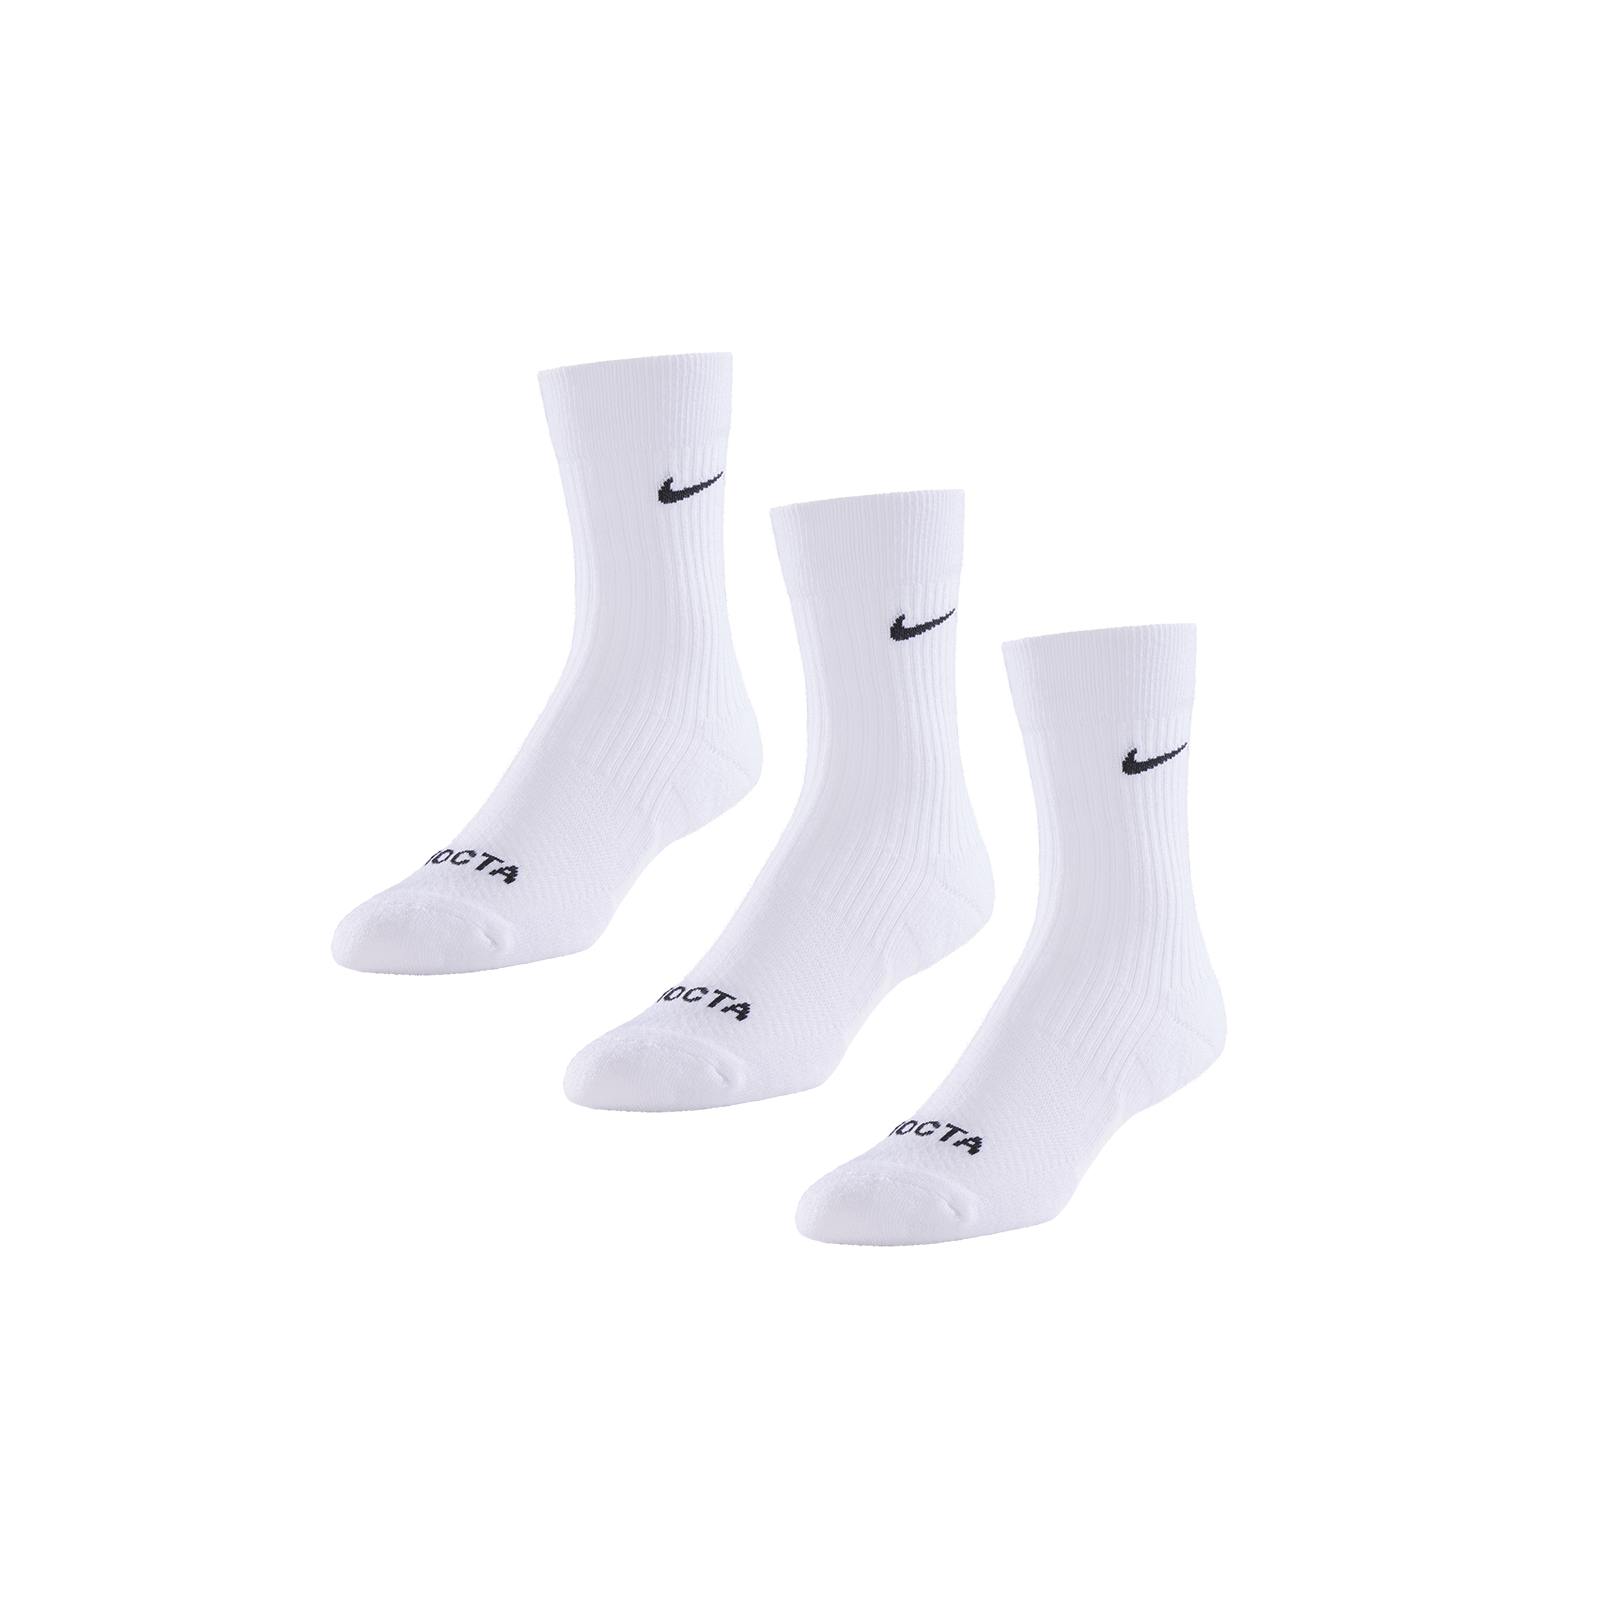 Crew Socks 3 Pack - IMAGE 1